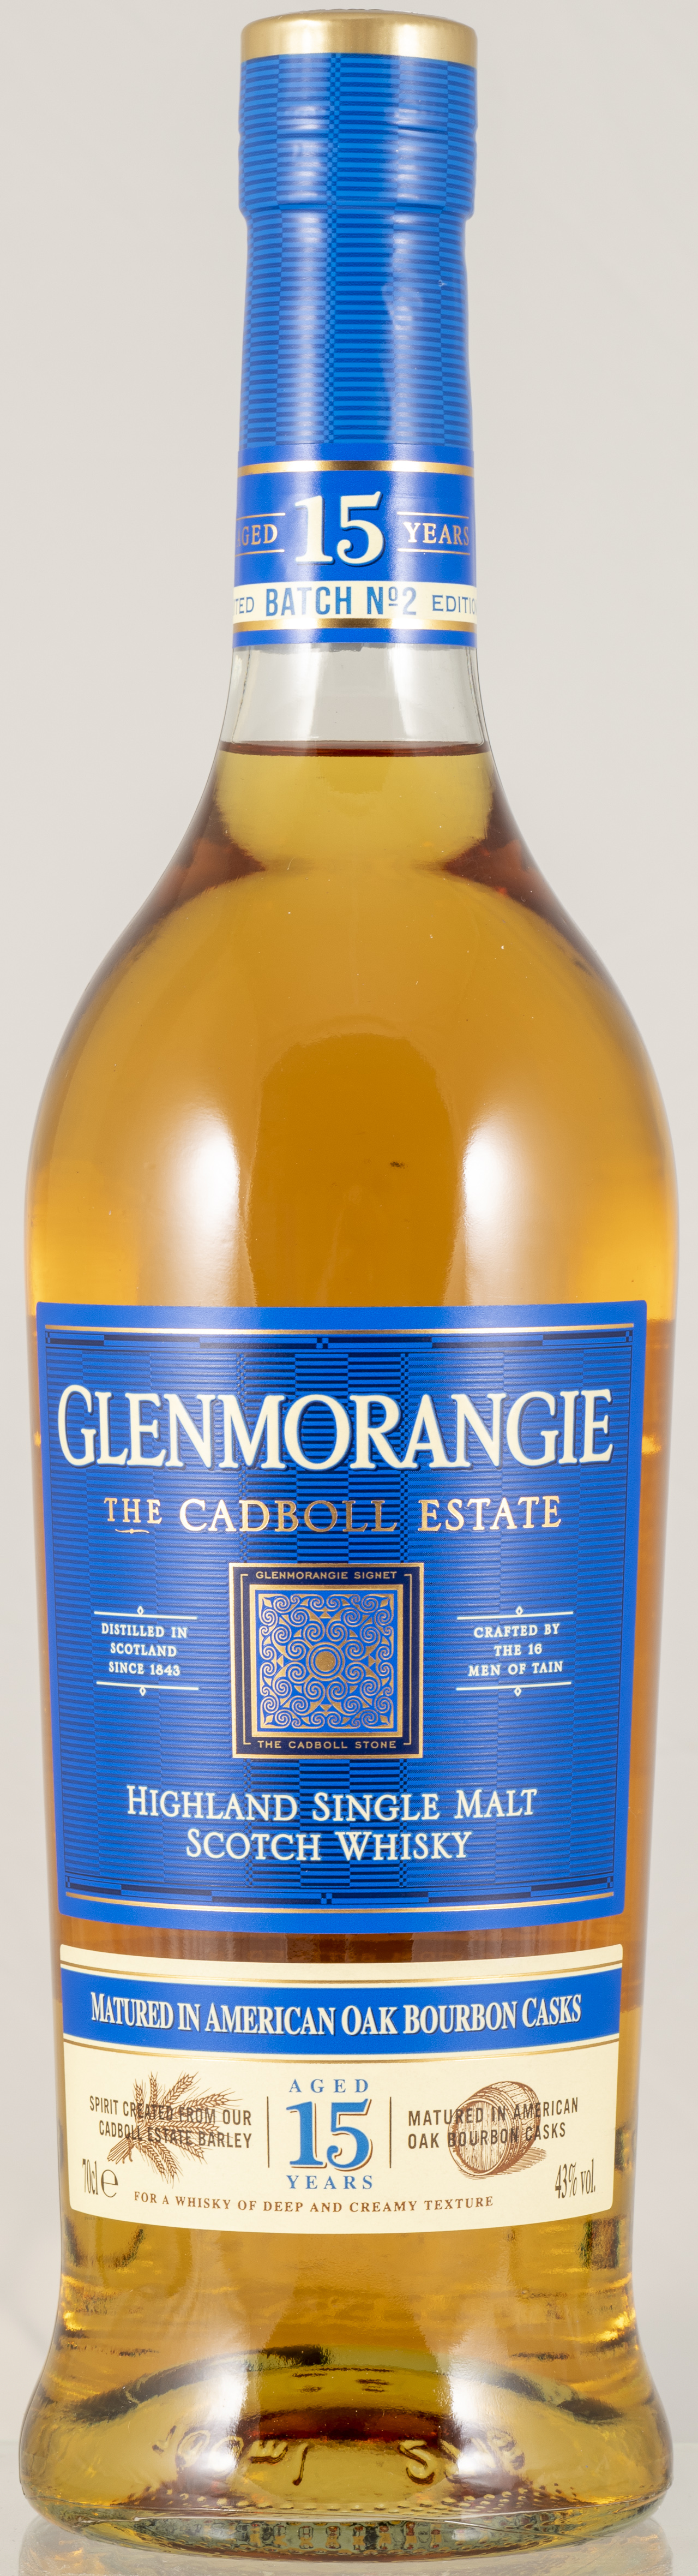 Billede: PHC_7065 - Glenmorangie The Cadboll Estate 15 Batch 2 - bottle front.jpg